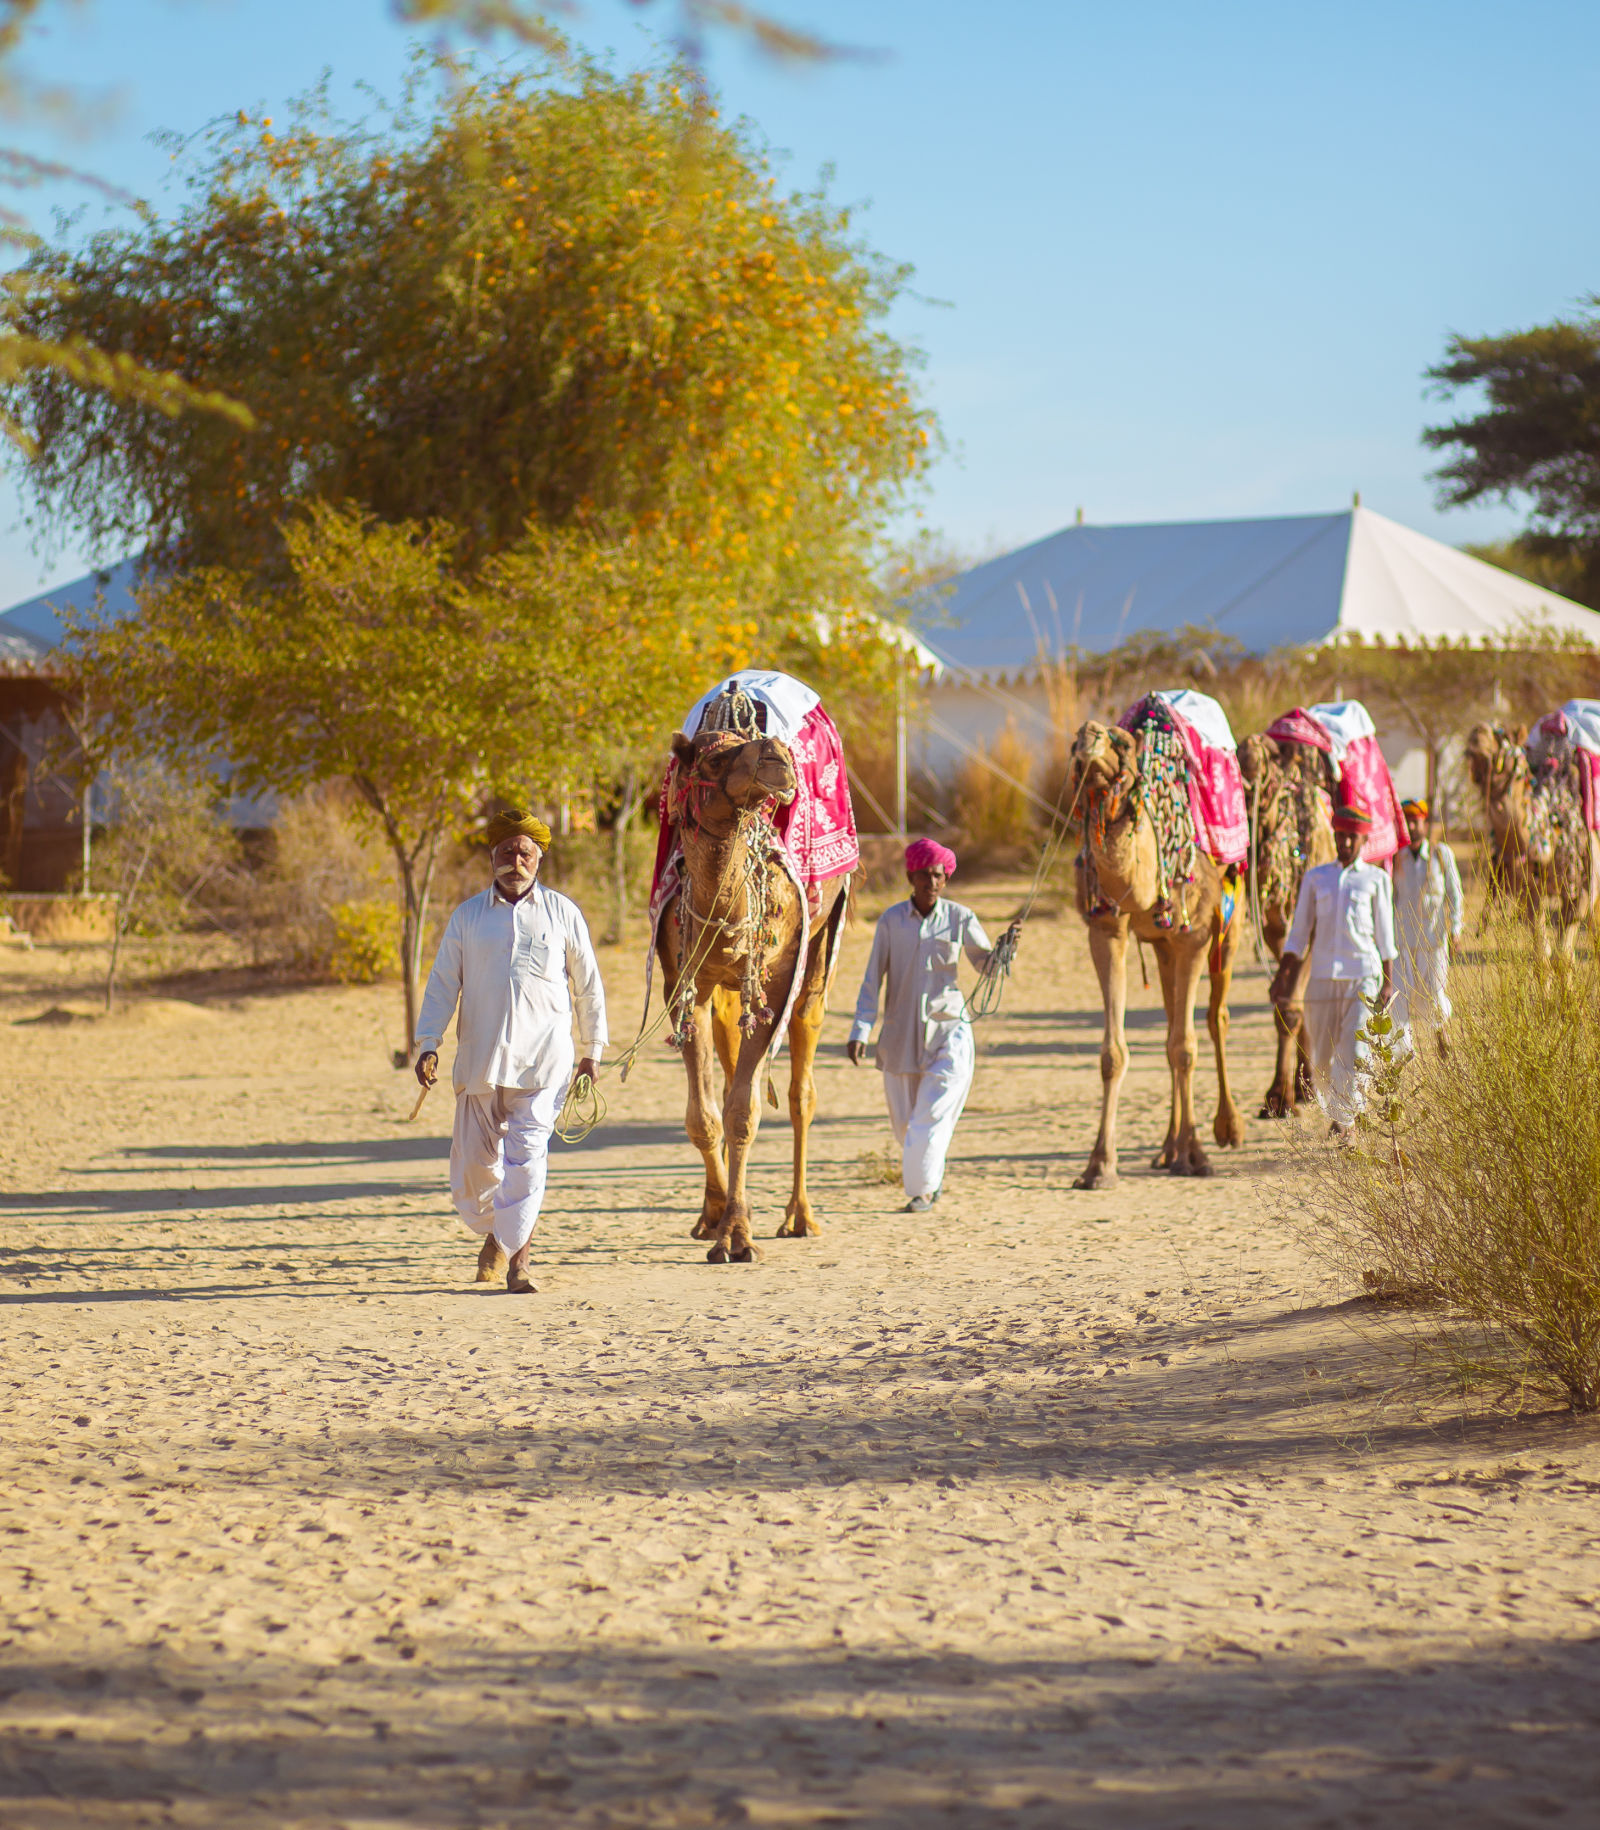 Locals walking their camels through the desert